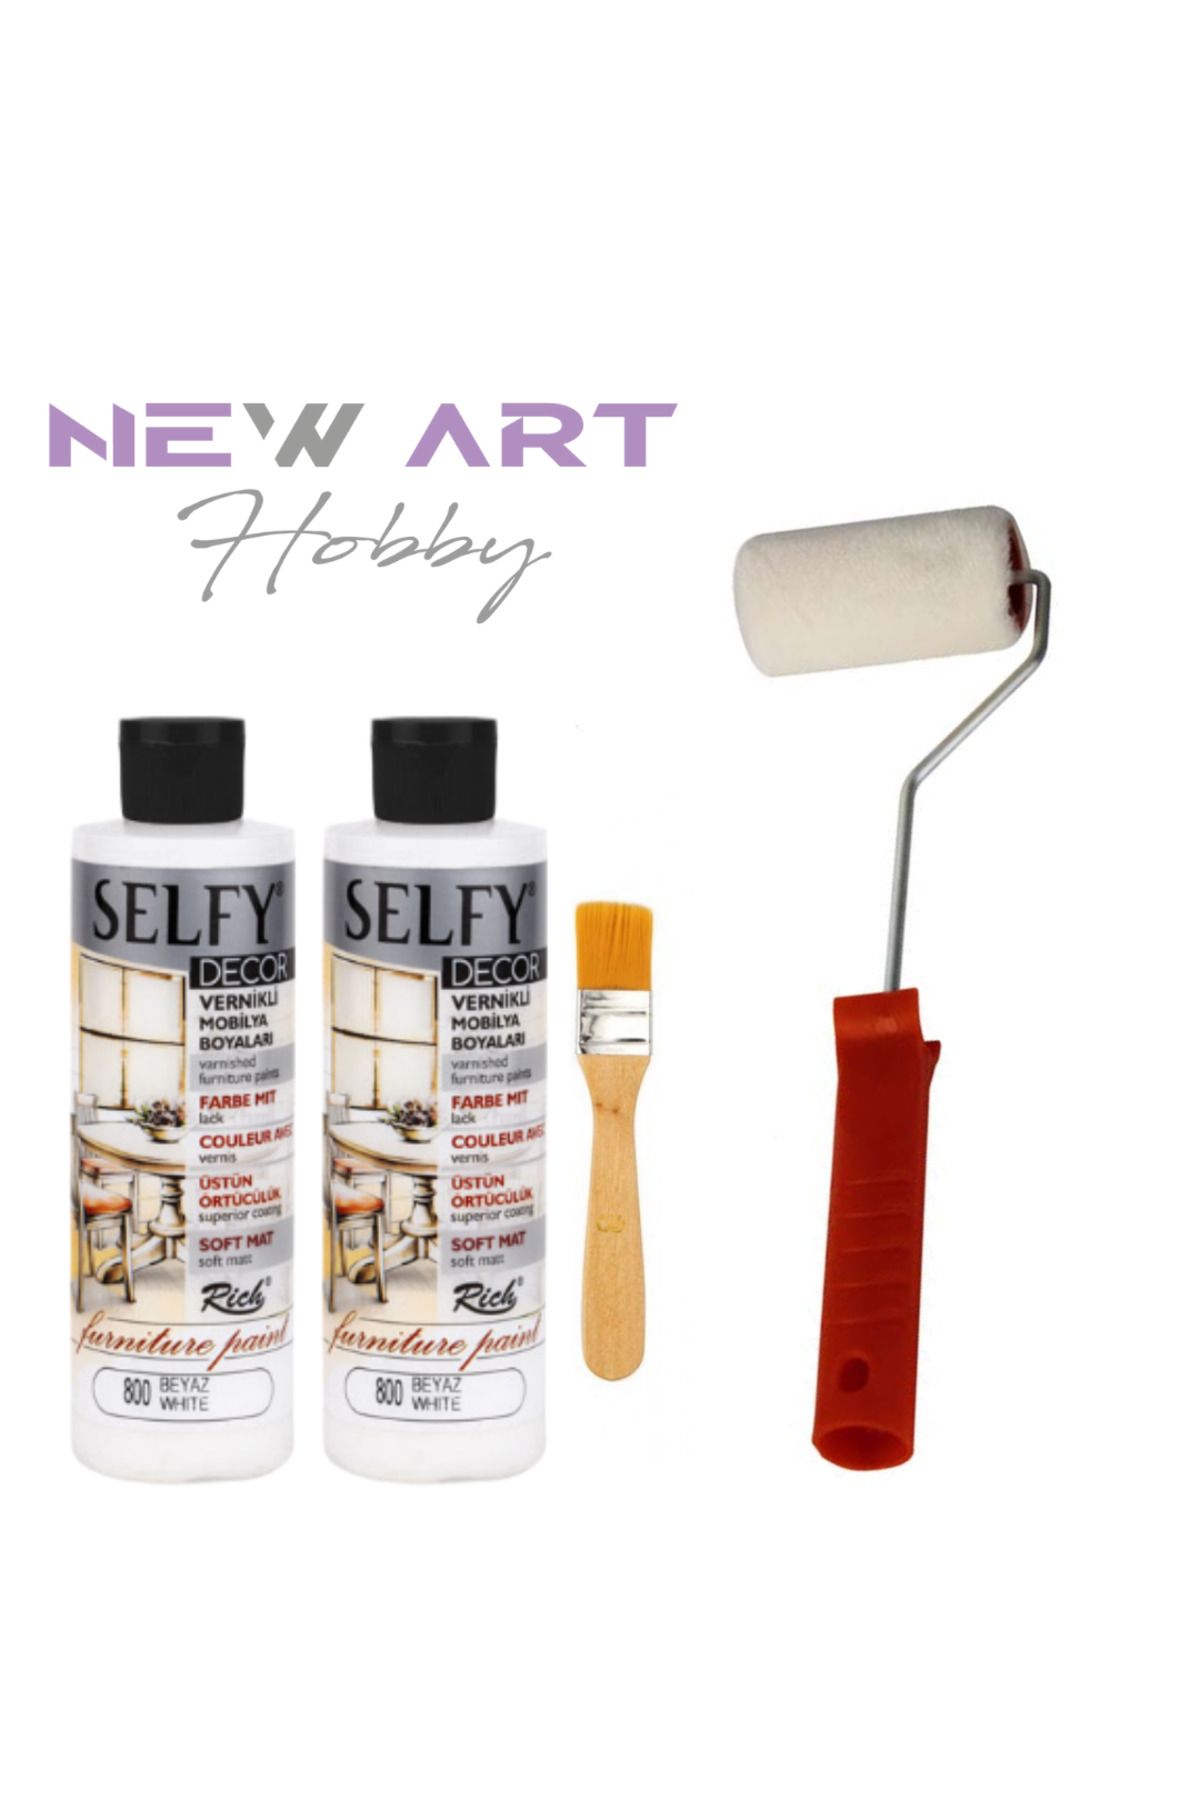 New Art Hobby Selfy Decor Kendinden Vernikli Mobilya Boyama Seti 240 Cc Beyaz x2 + Maxi İpek Rulo + Fırça